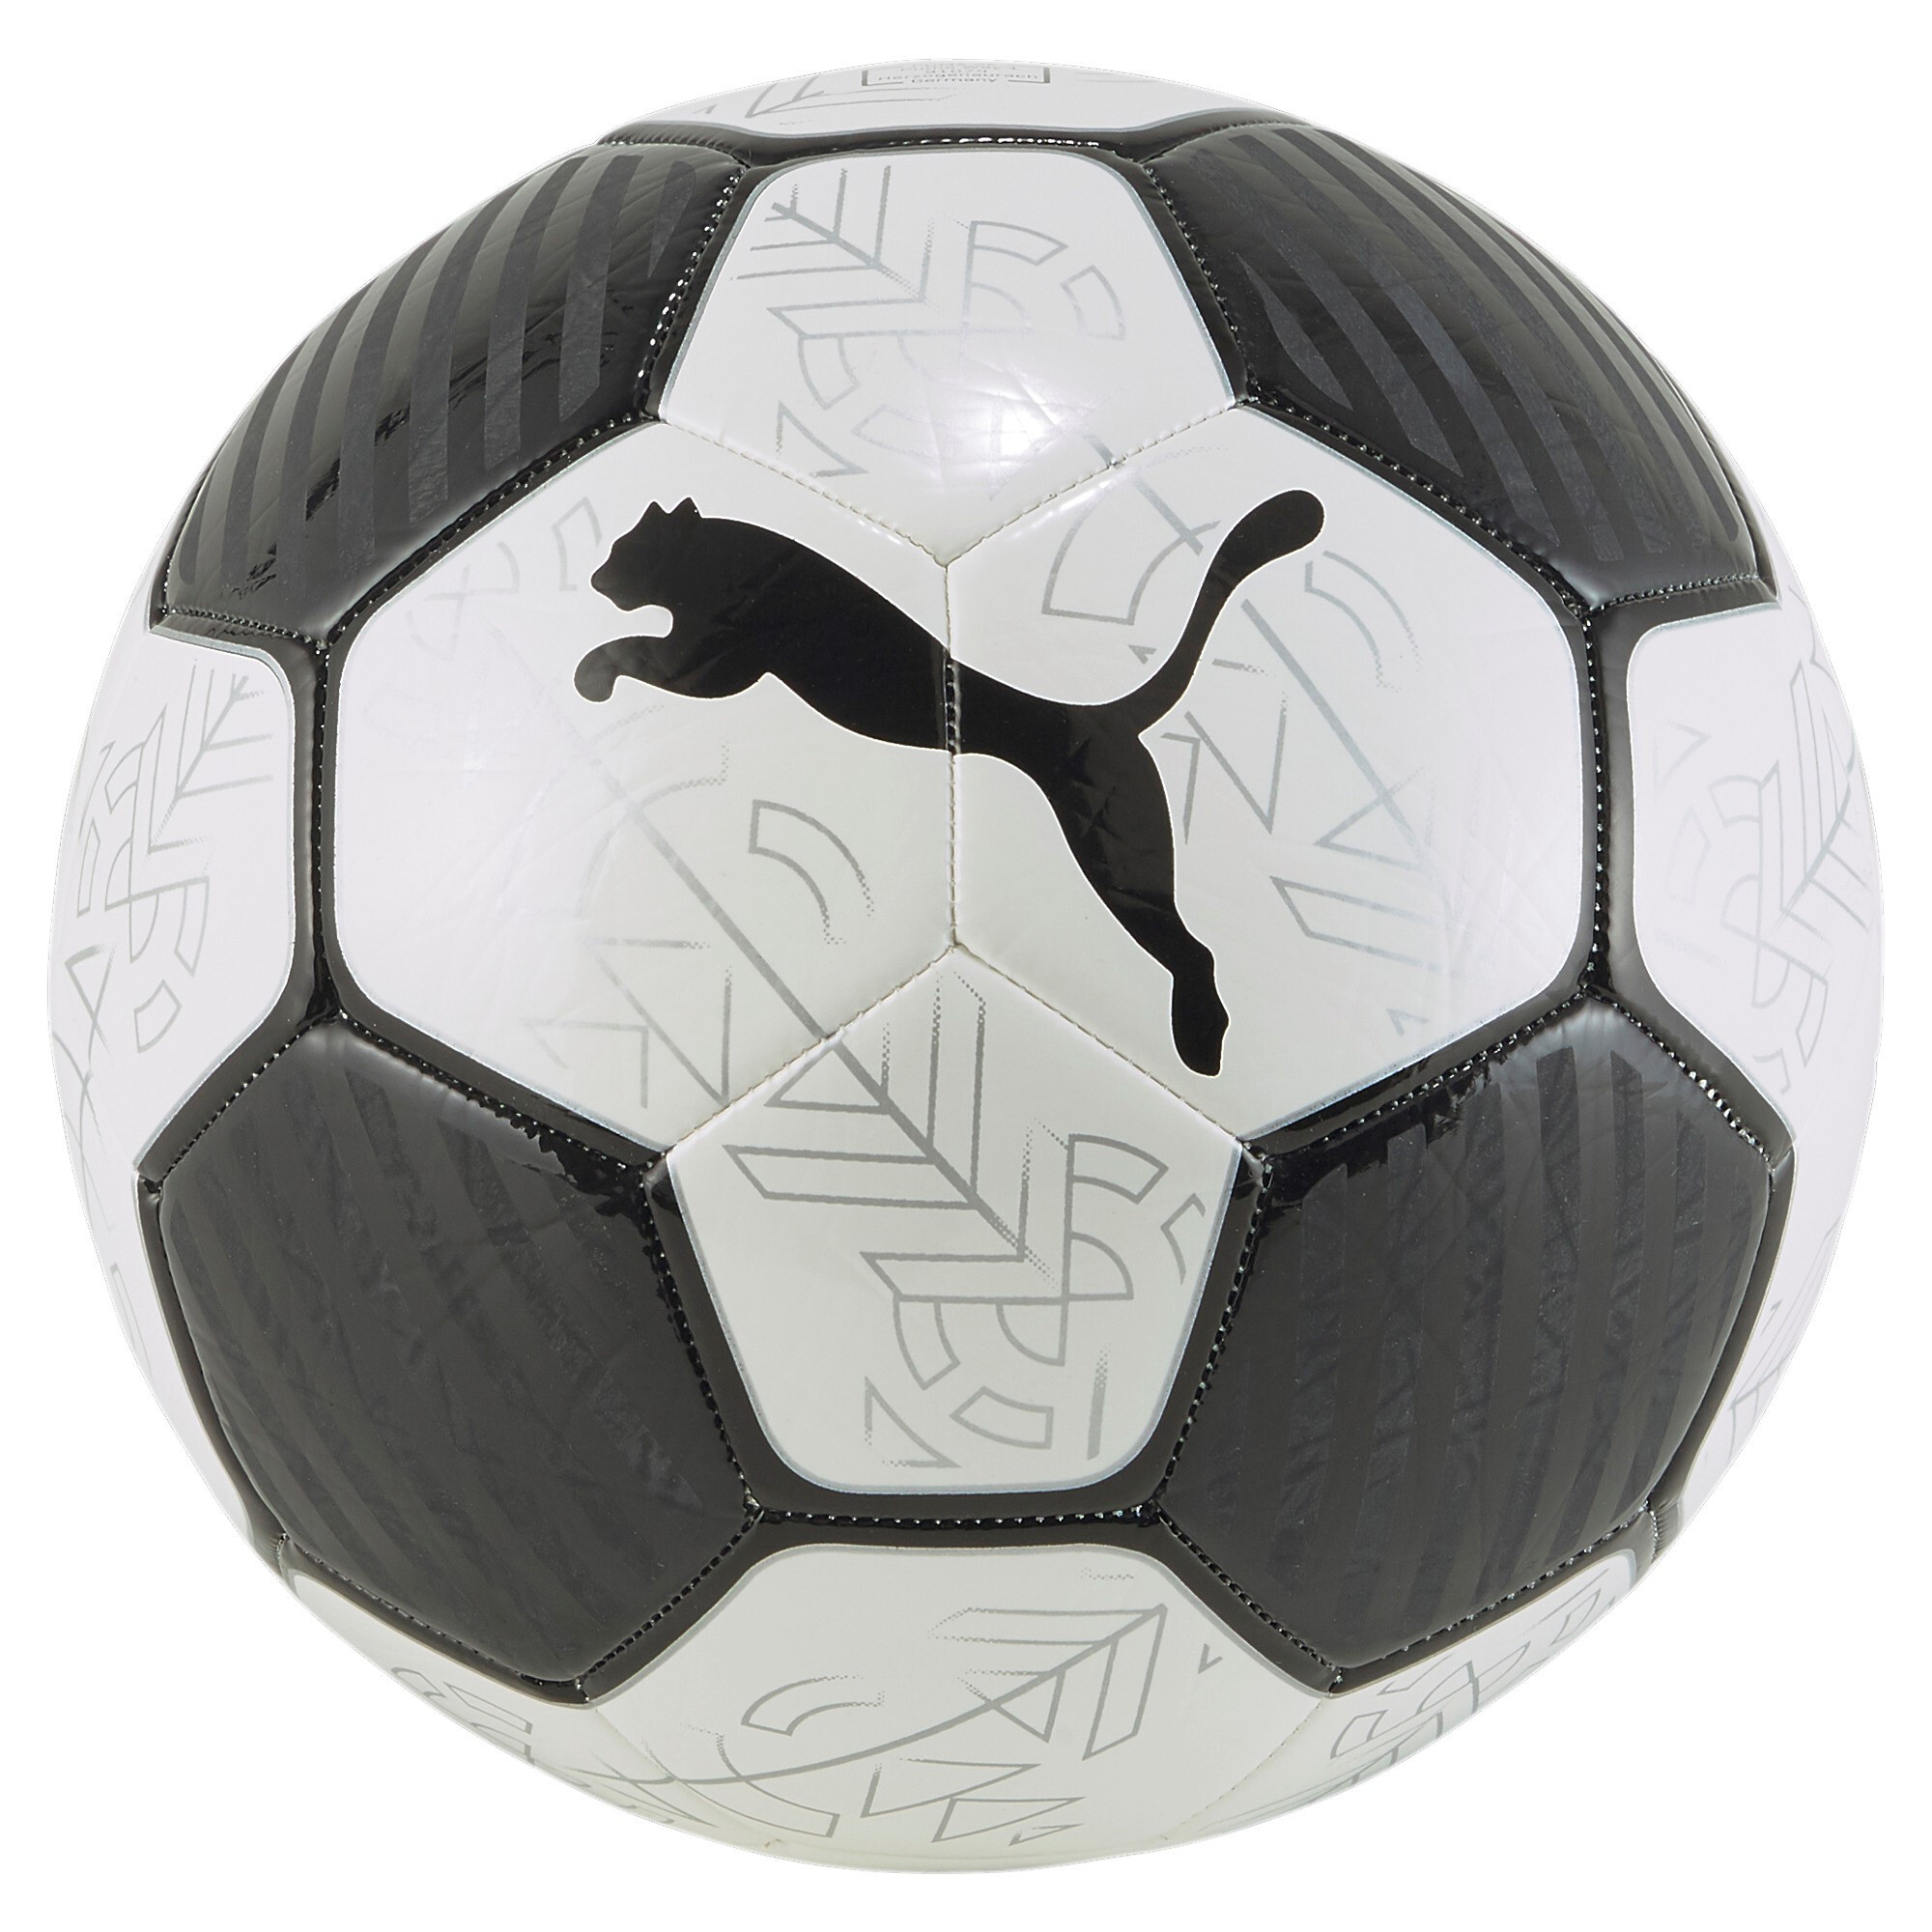 Ballon de football Puma Prestige - Blanc/Noir - 083992 01